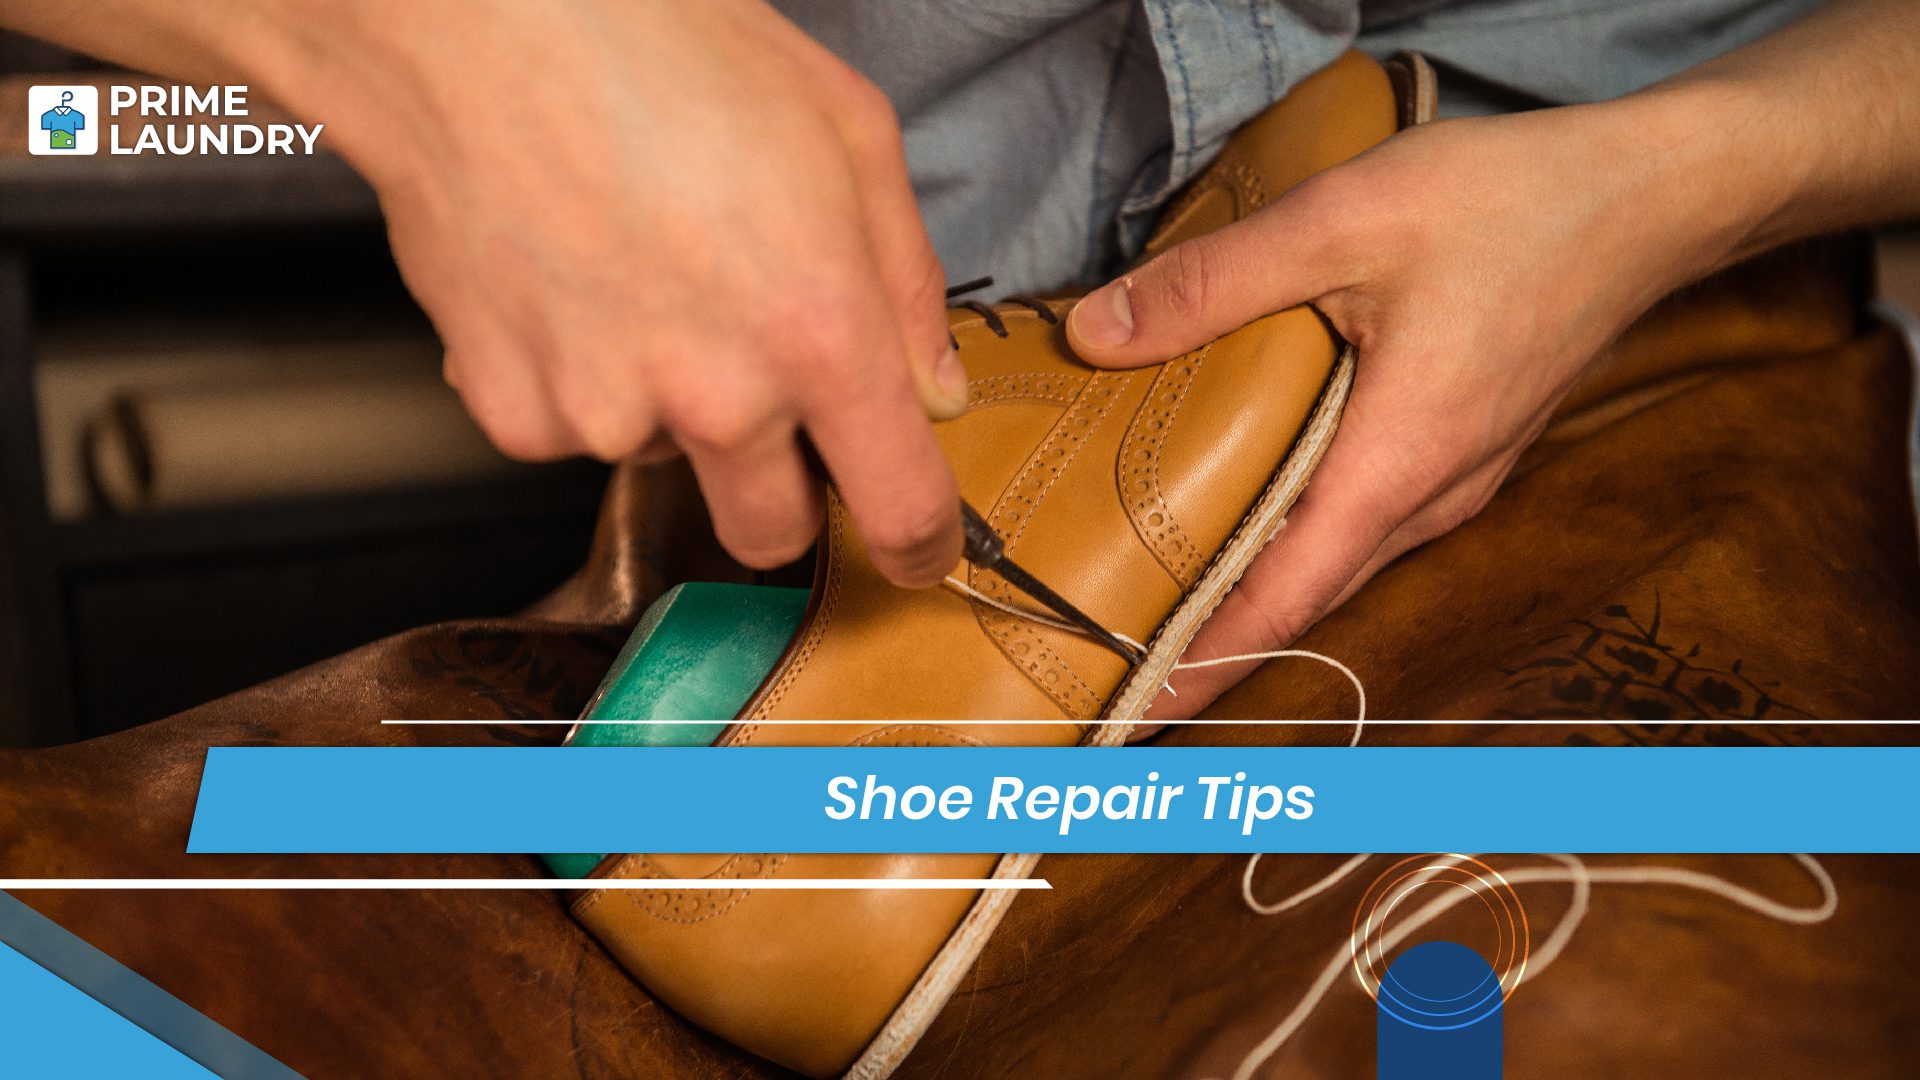 Shoe Repair Secrets that everyone should know